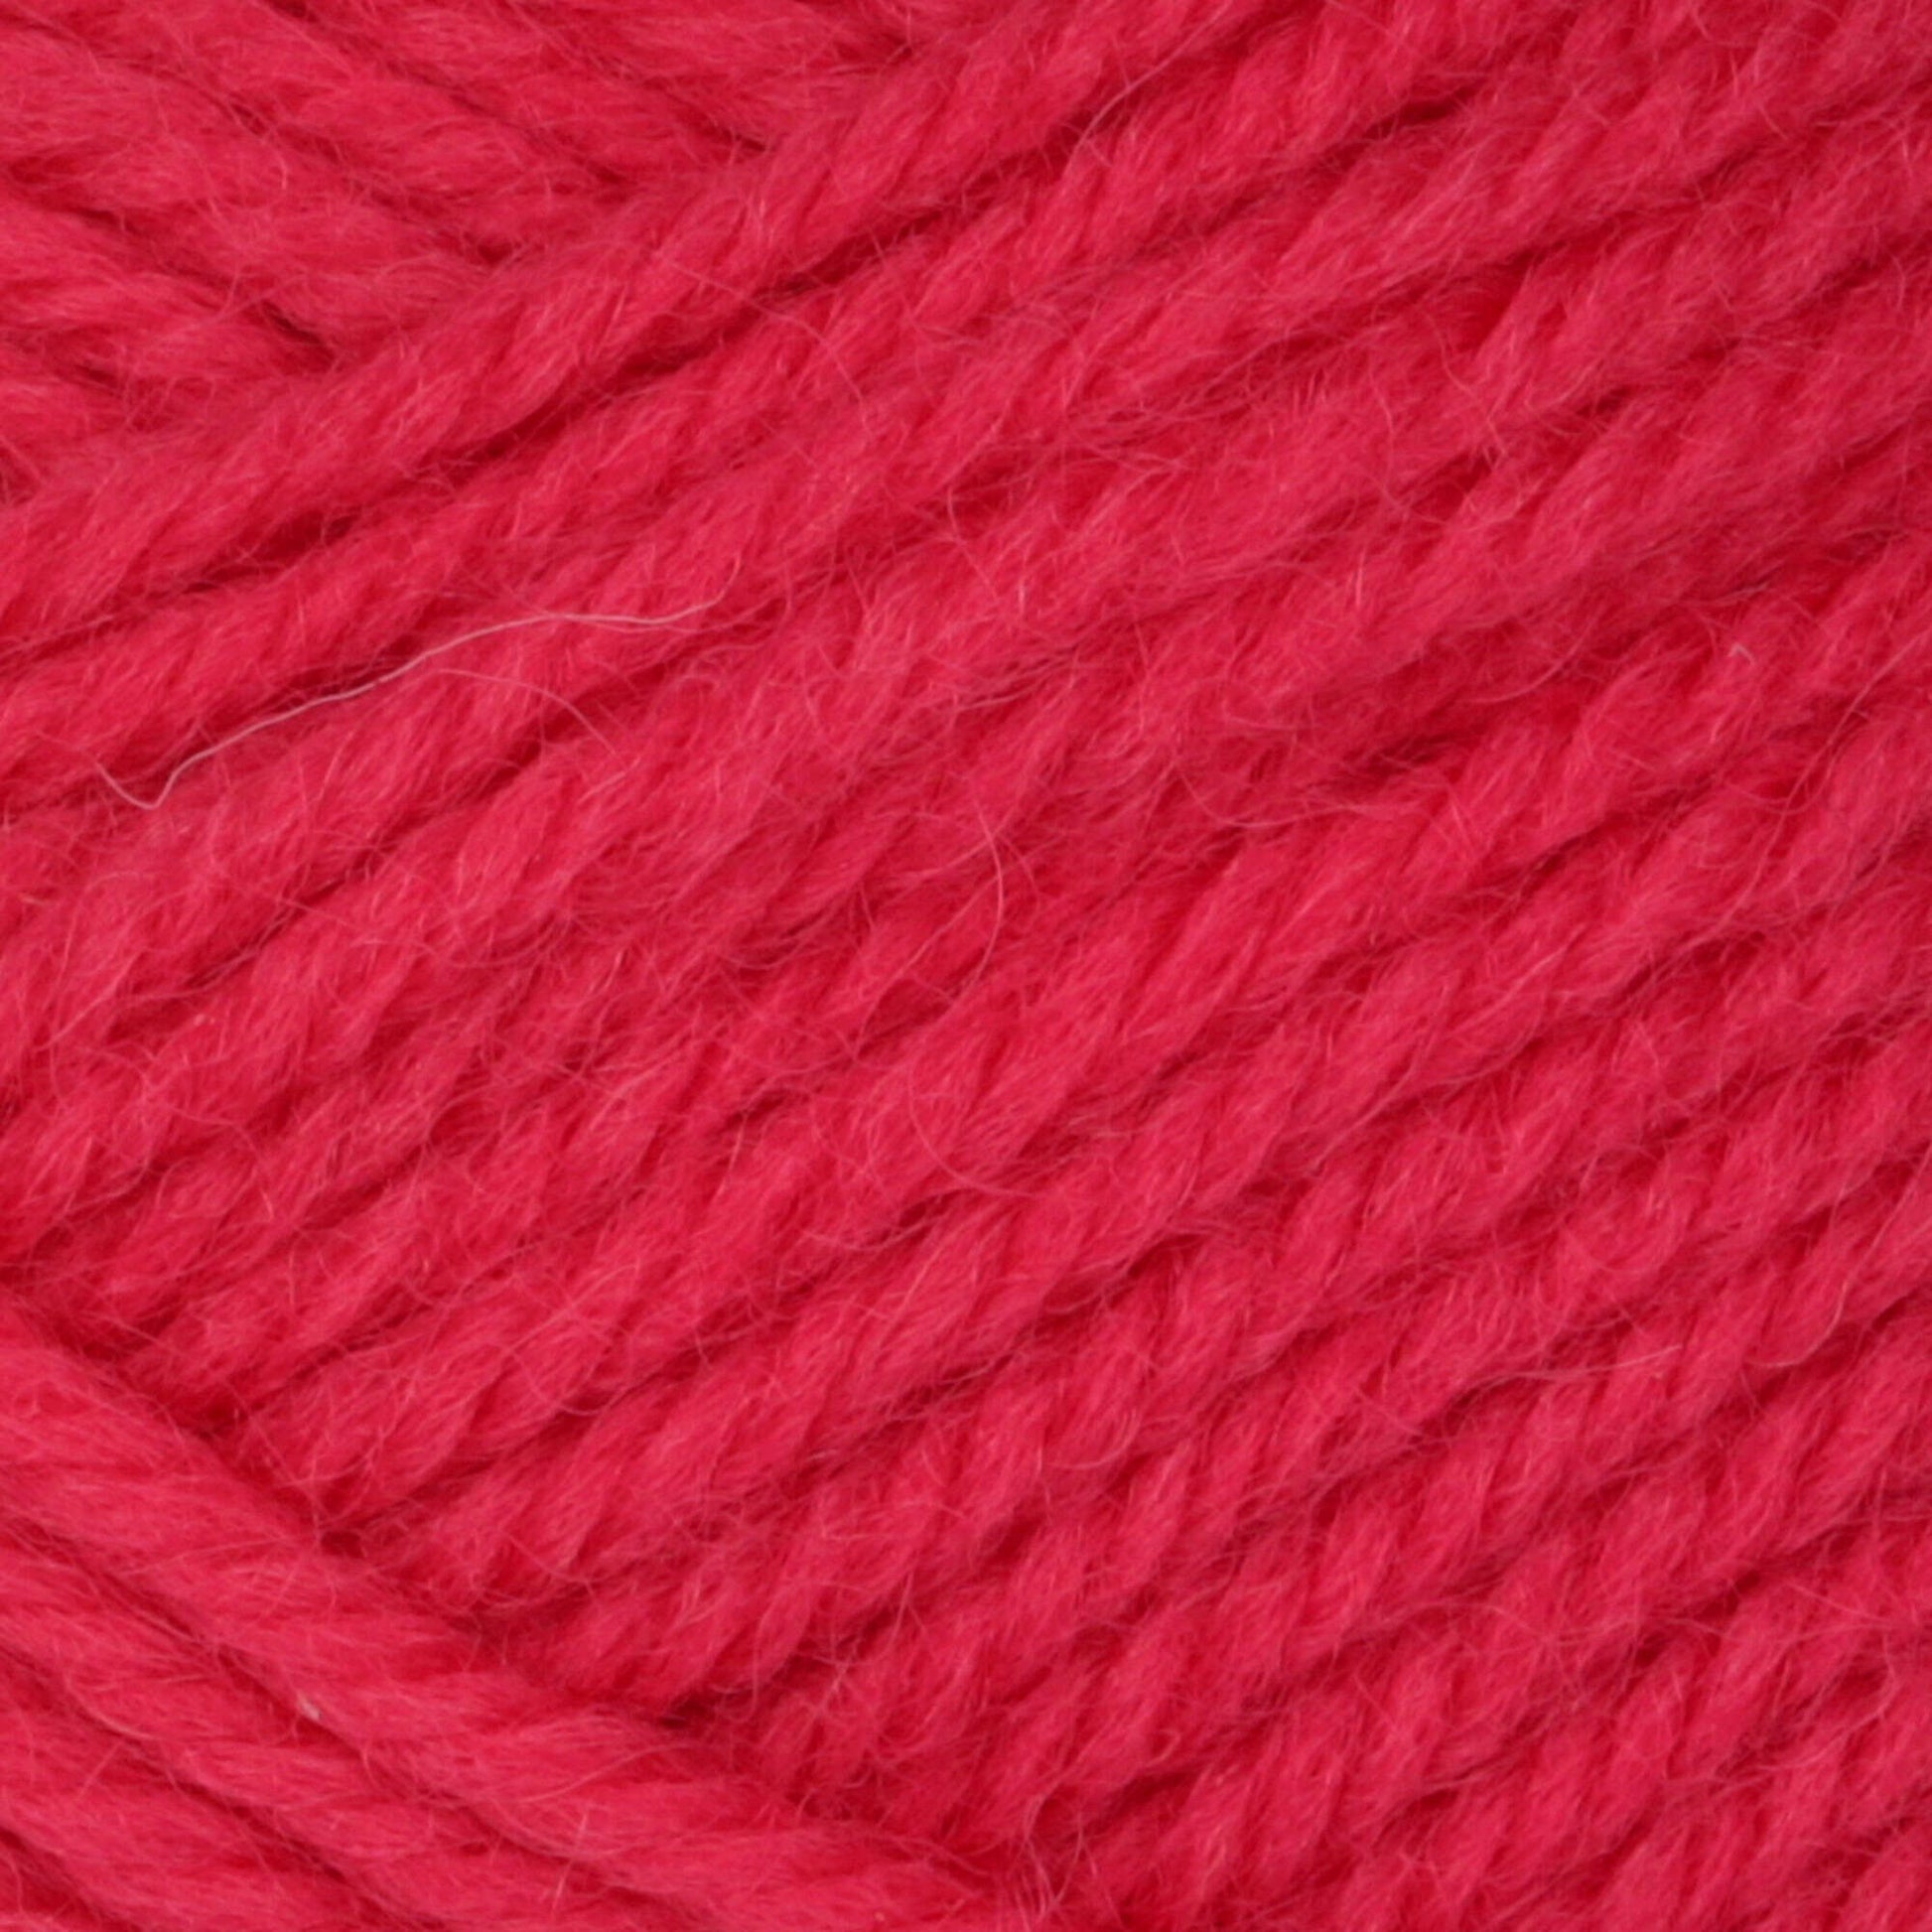 Patons Classic Wool DK Superwash Yarn - Discontinued Shades Deep Blush